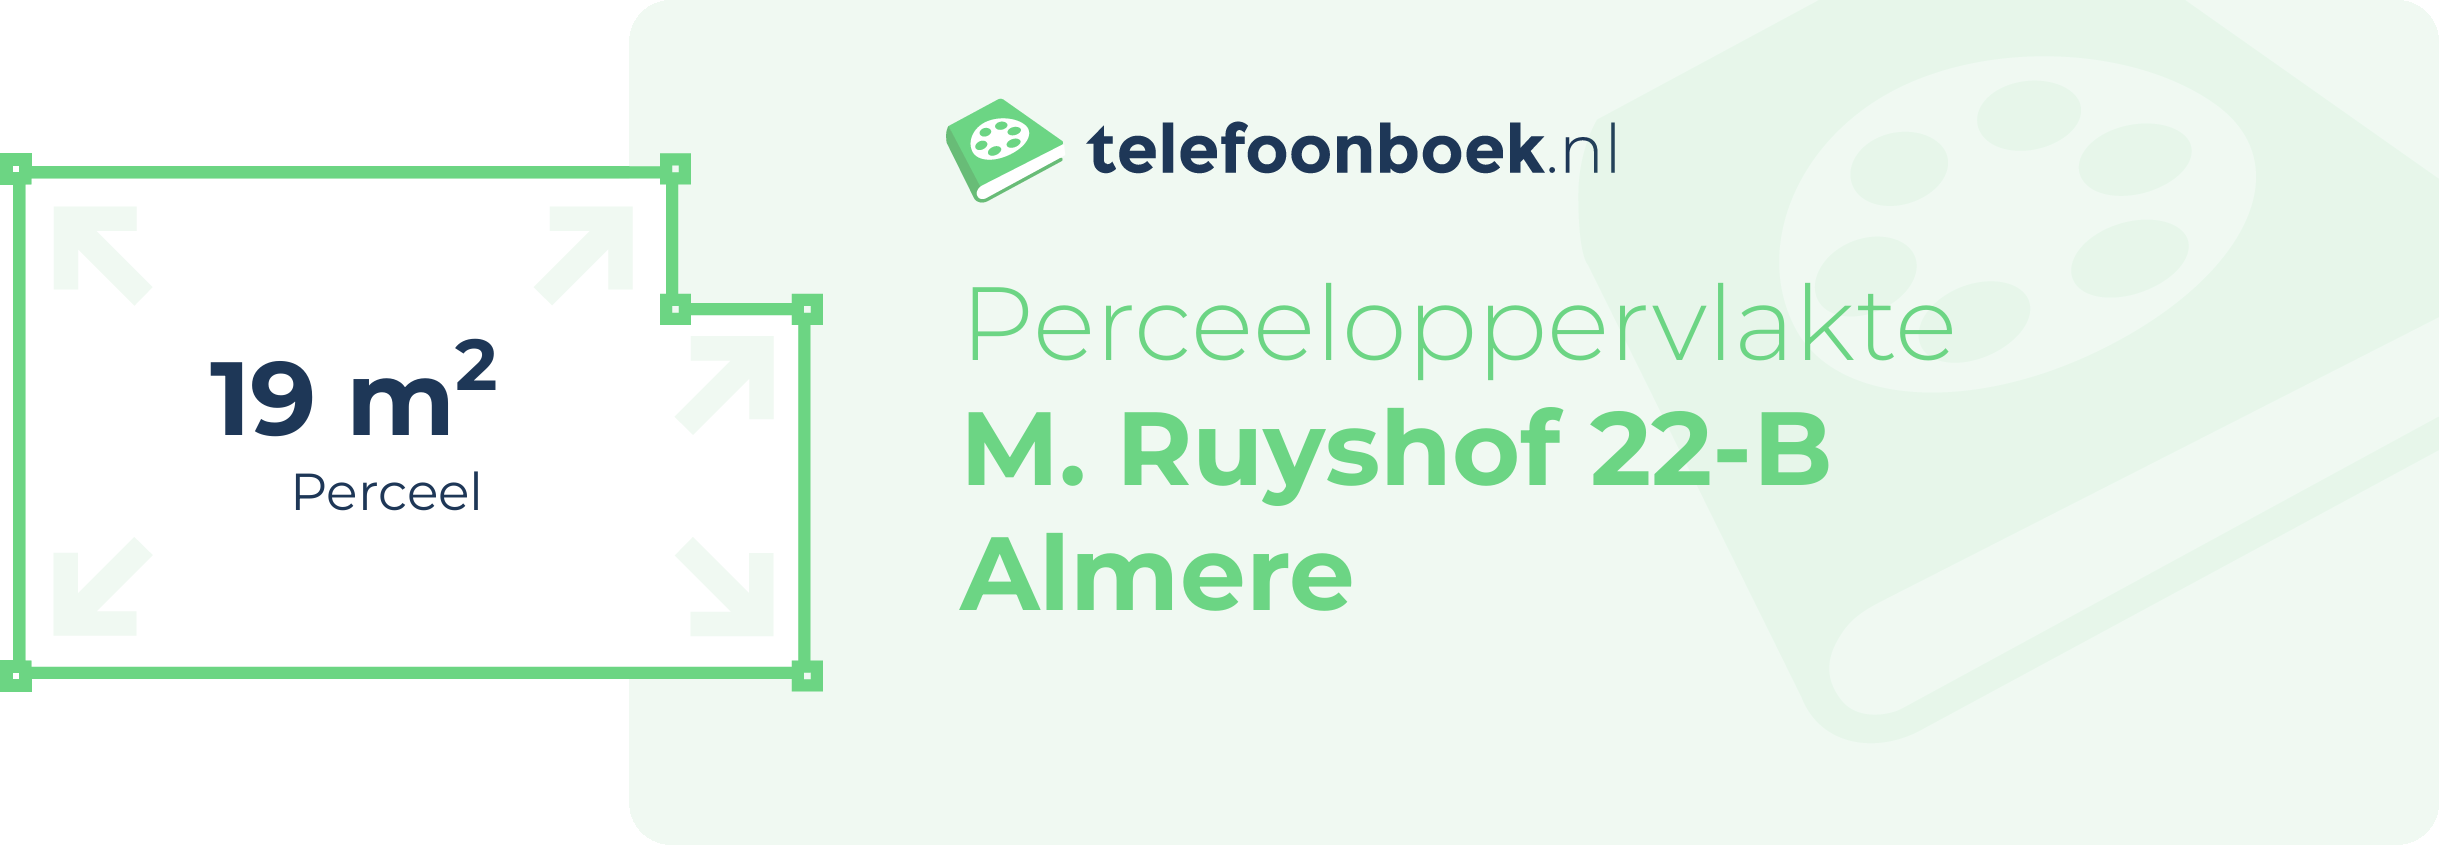 Perceeloppervlakte M. Ruyshof 22-B Almere